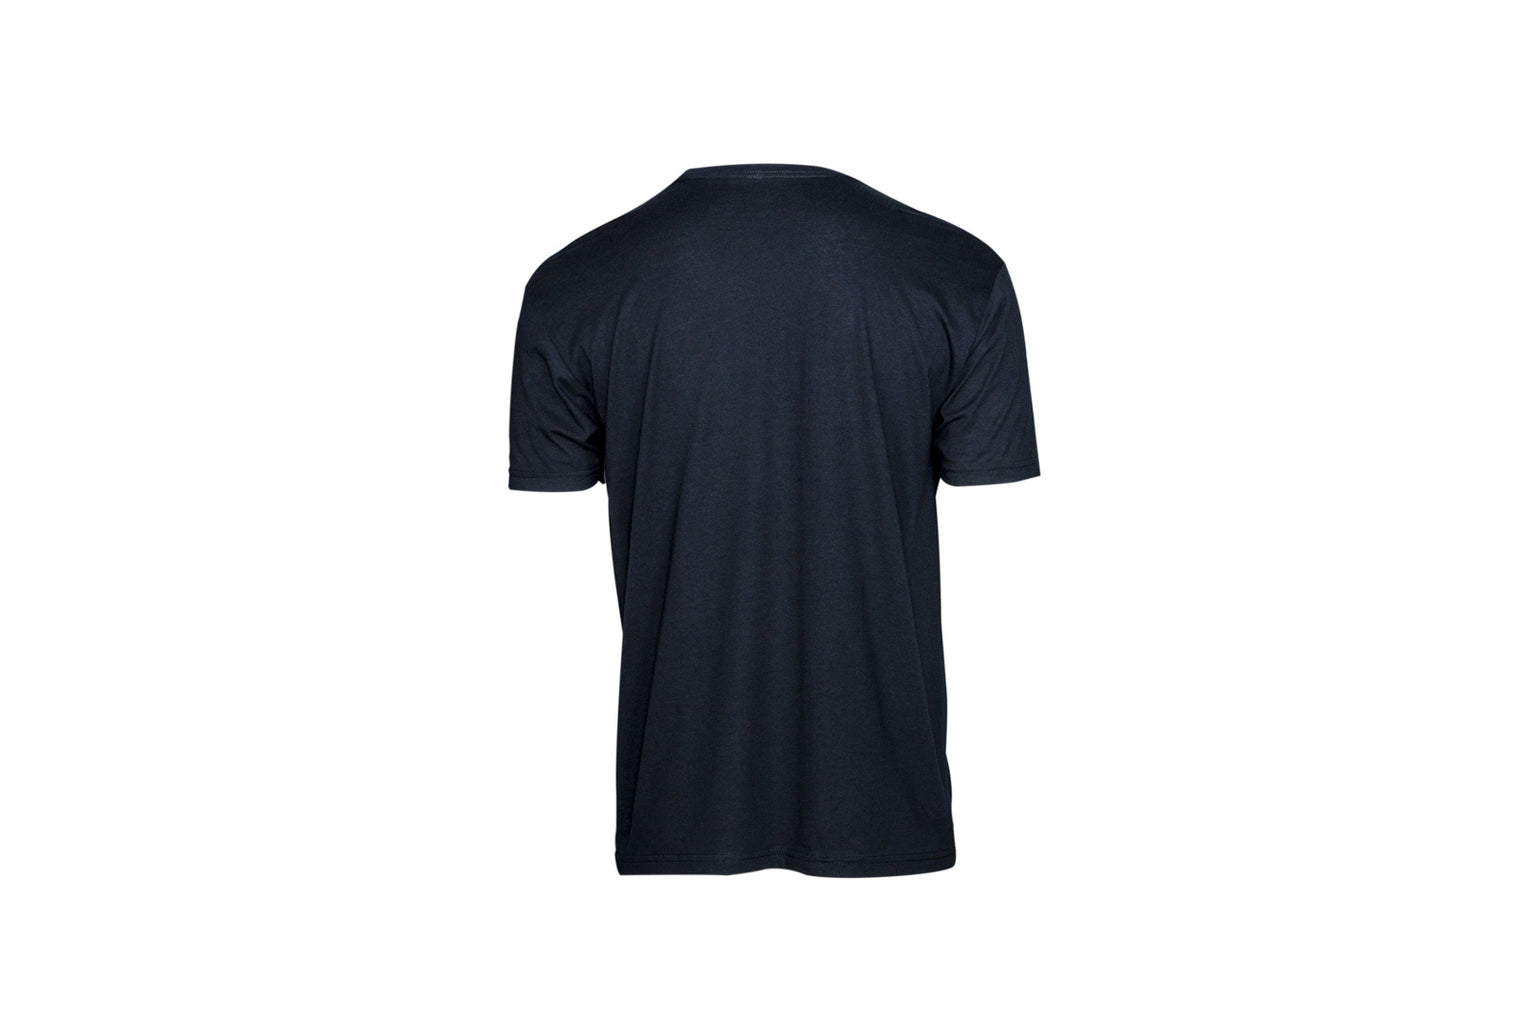 Worldwide Cyclery T-Shirt Black, XL - T-Shirt - WC